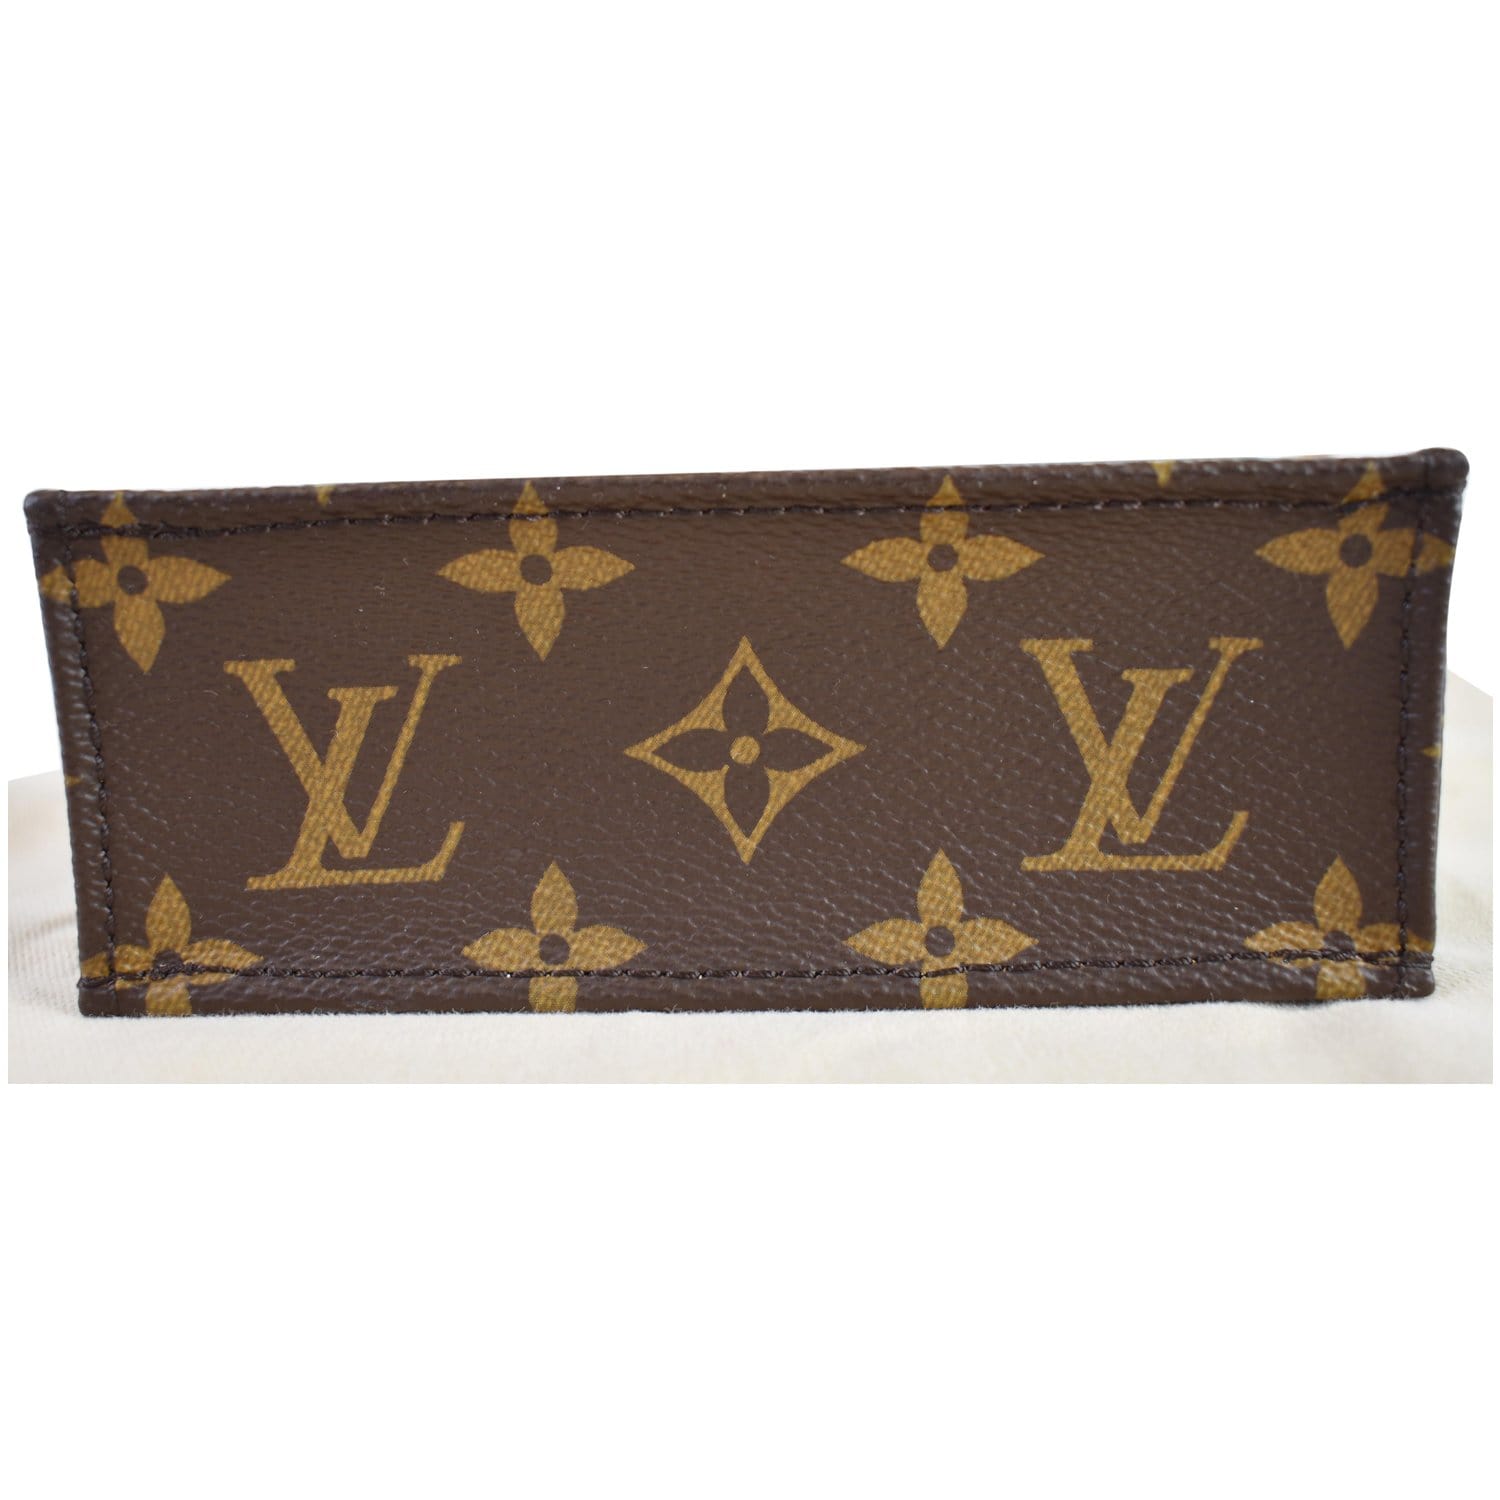 Louis Vuitton PETIT SAC PLAT Monogram 2WAY Plain Leather Elegant Style  Crossbody Logo (M81416)